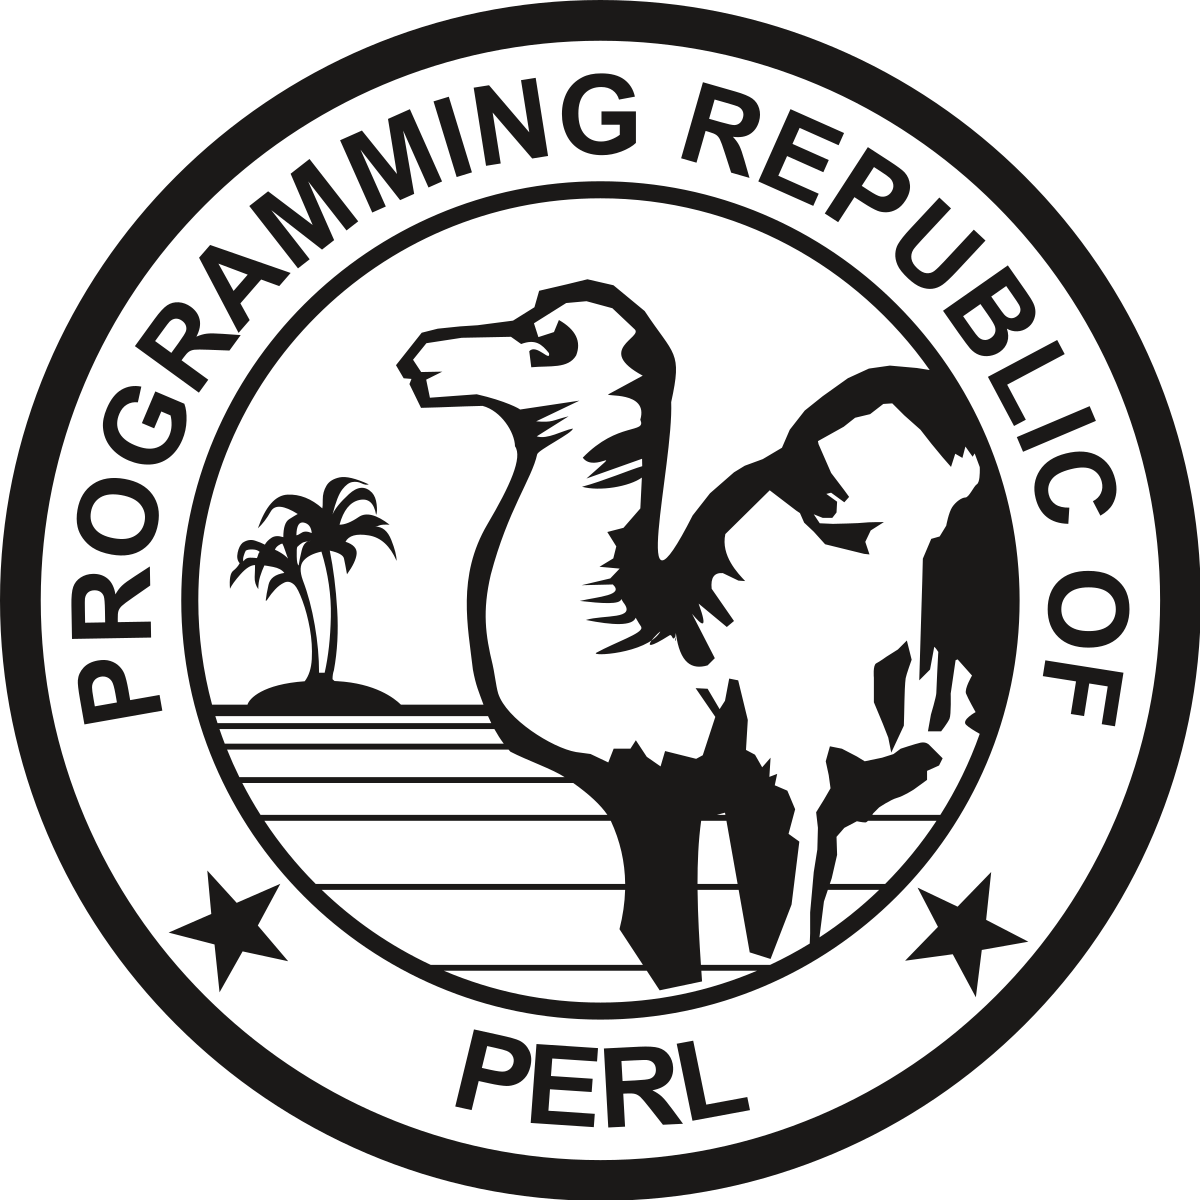 Perl - Wikipedia